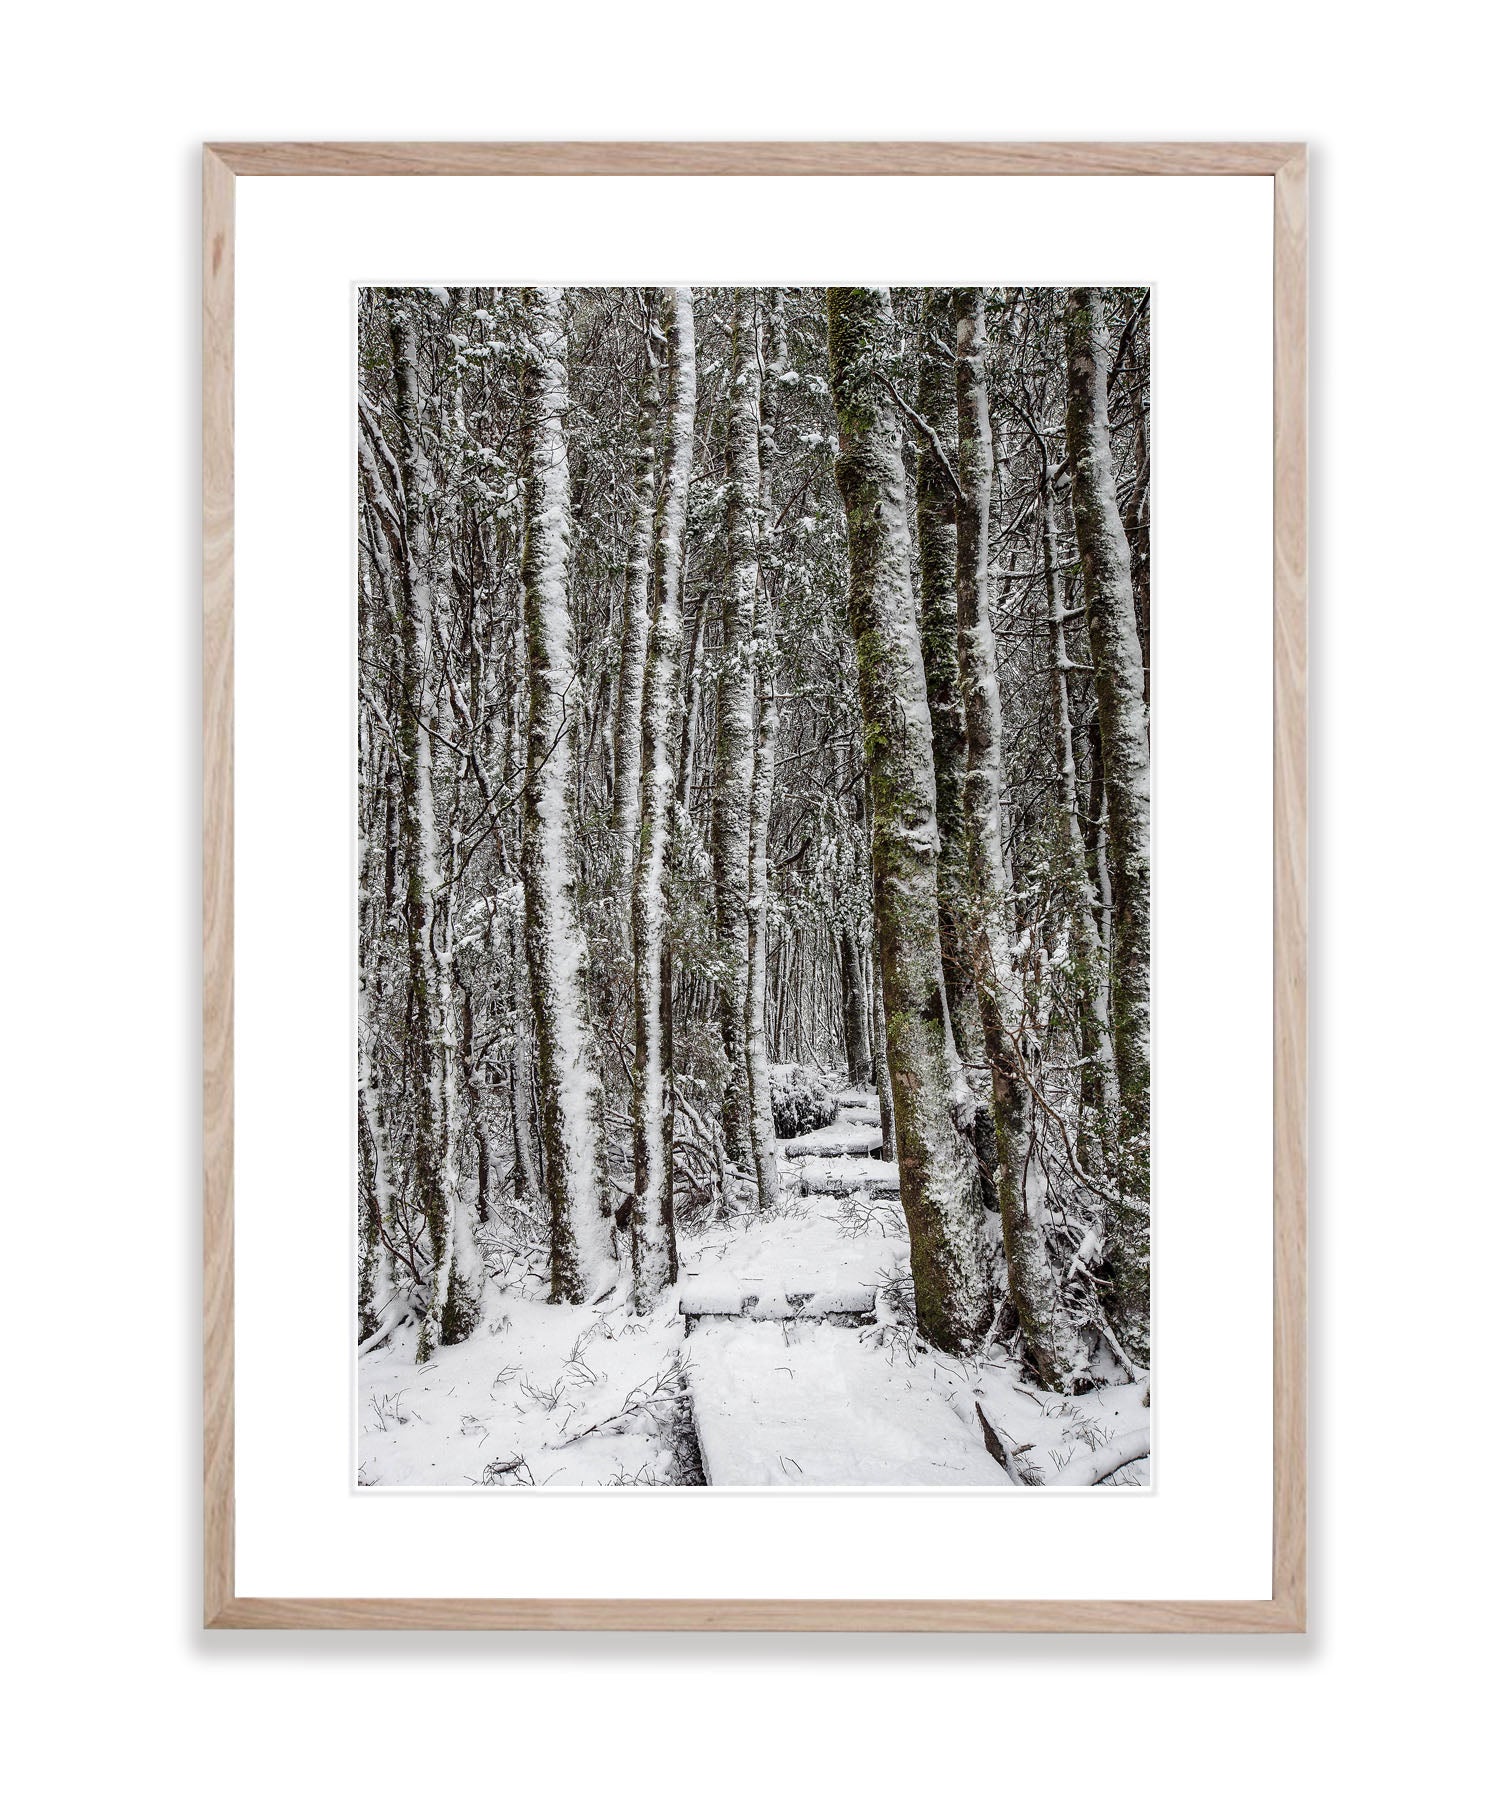 Walkway through the Snow-Covered Forest, Cradle Mountain, Tasmania